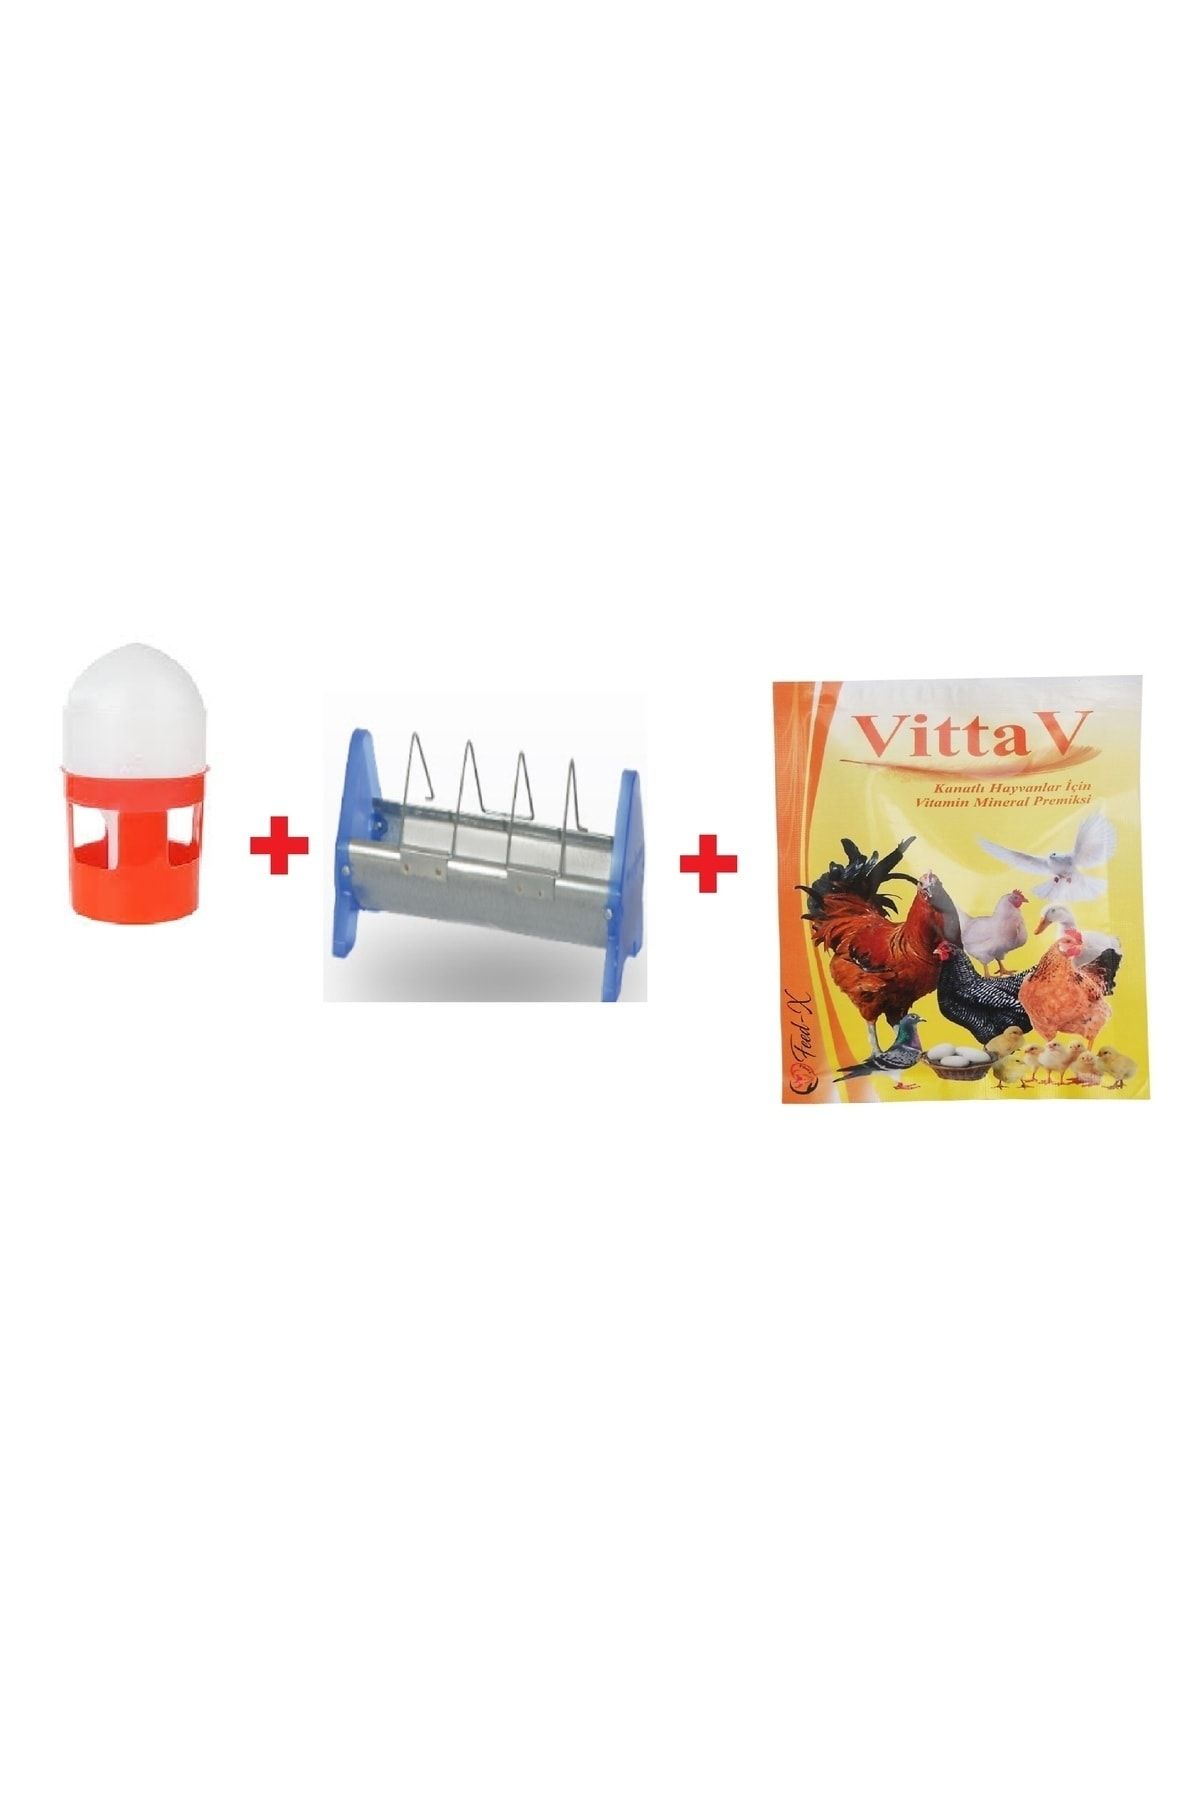 Feed-X Güvercin Vitamini Vittav 100 gr (vitamin- mineral) +Güvercin Suluğu 1 Litre + 15 Cm Güvercin Yemlik